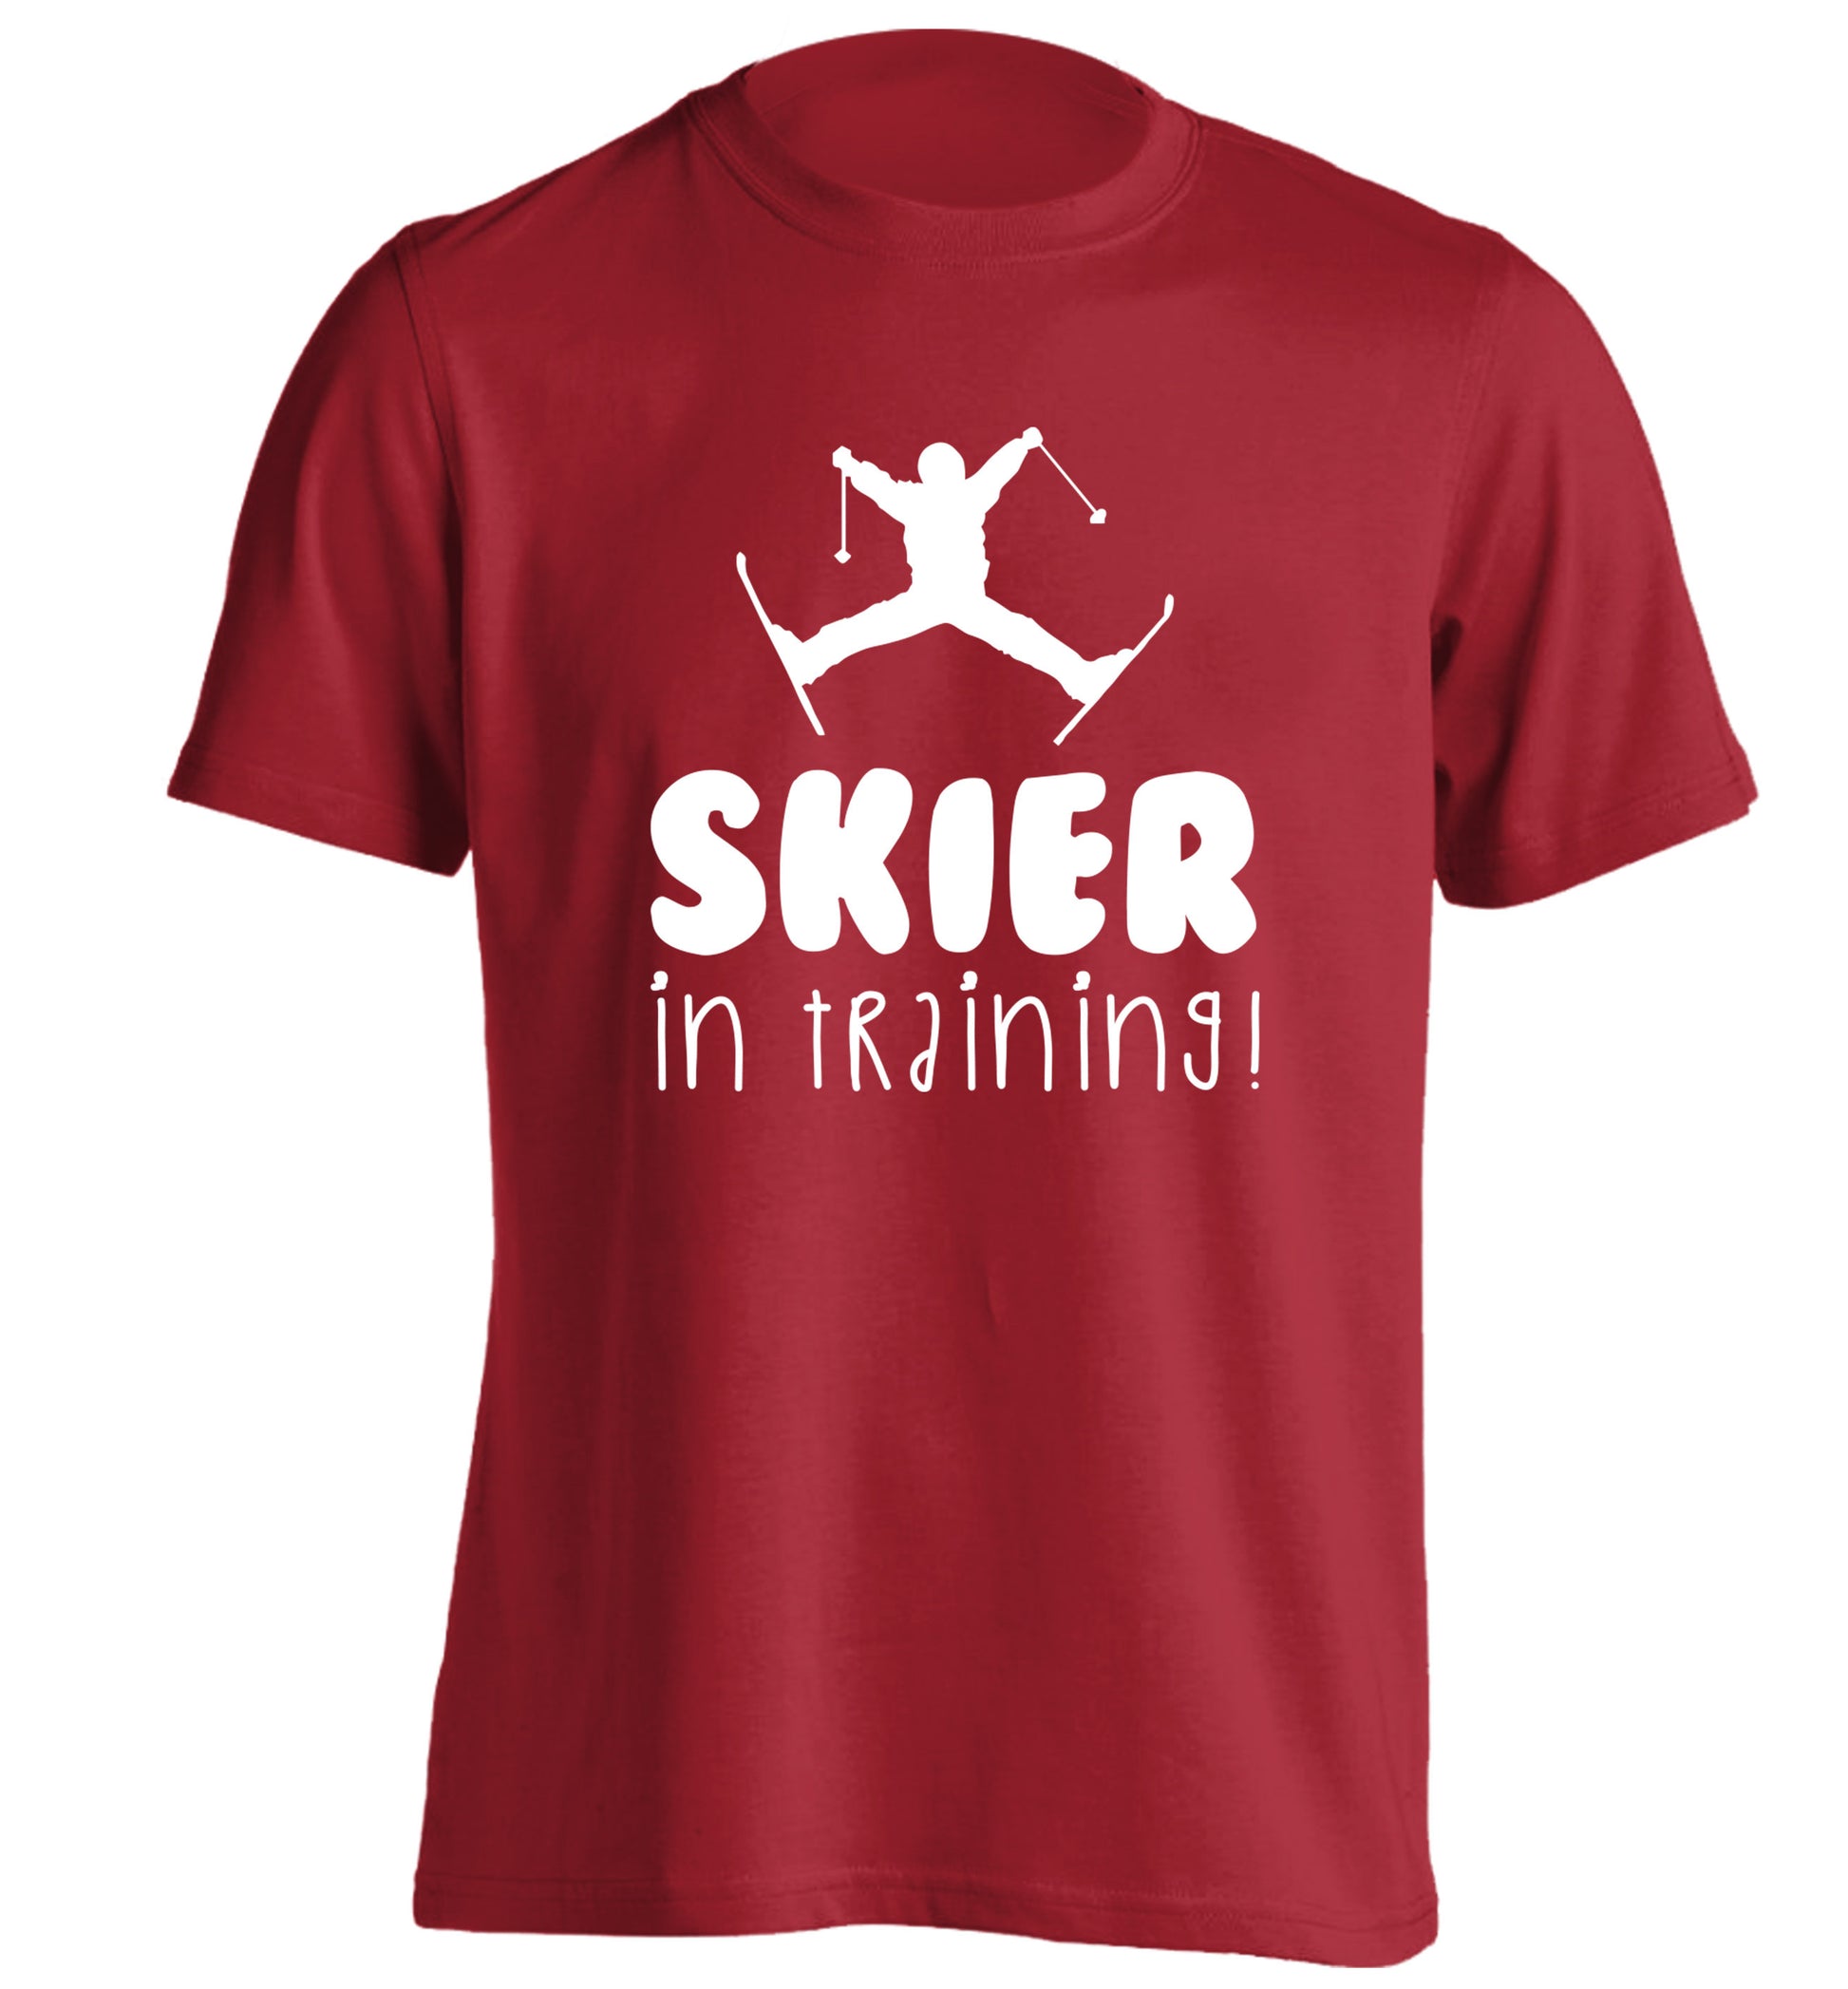 Skier in training adults unisex red Tshirt 2XL